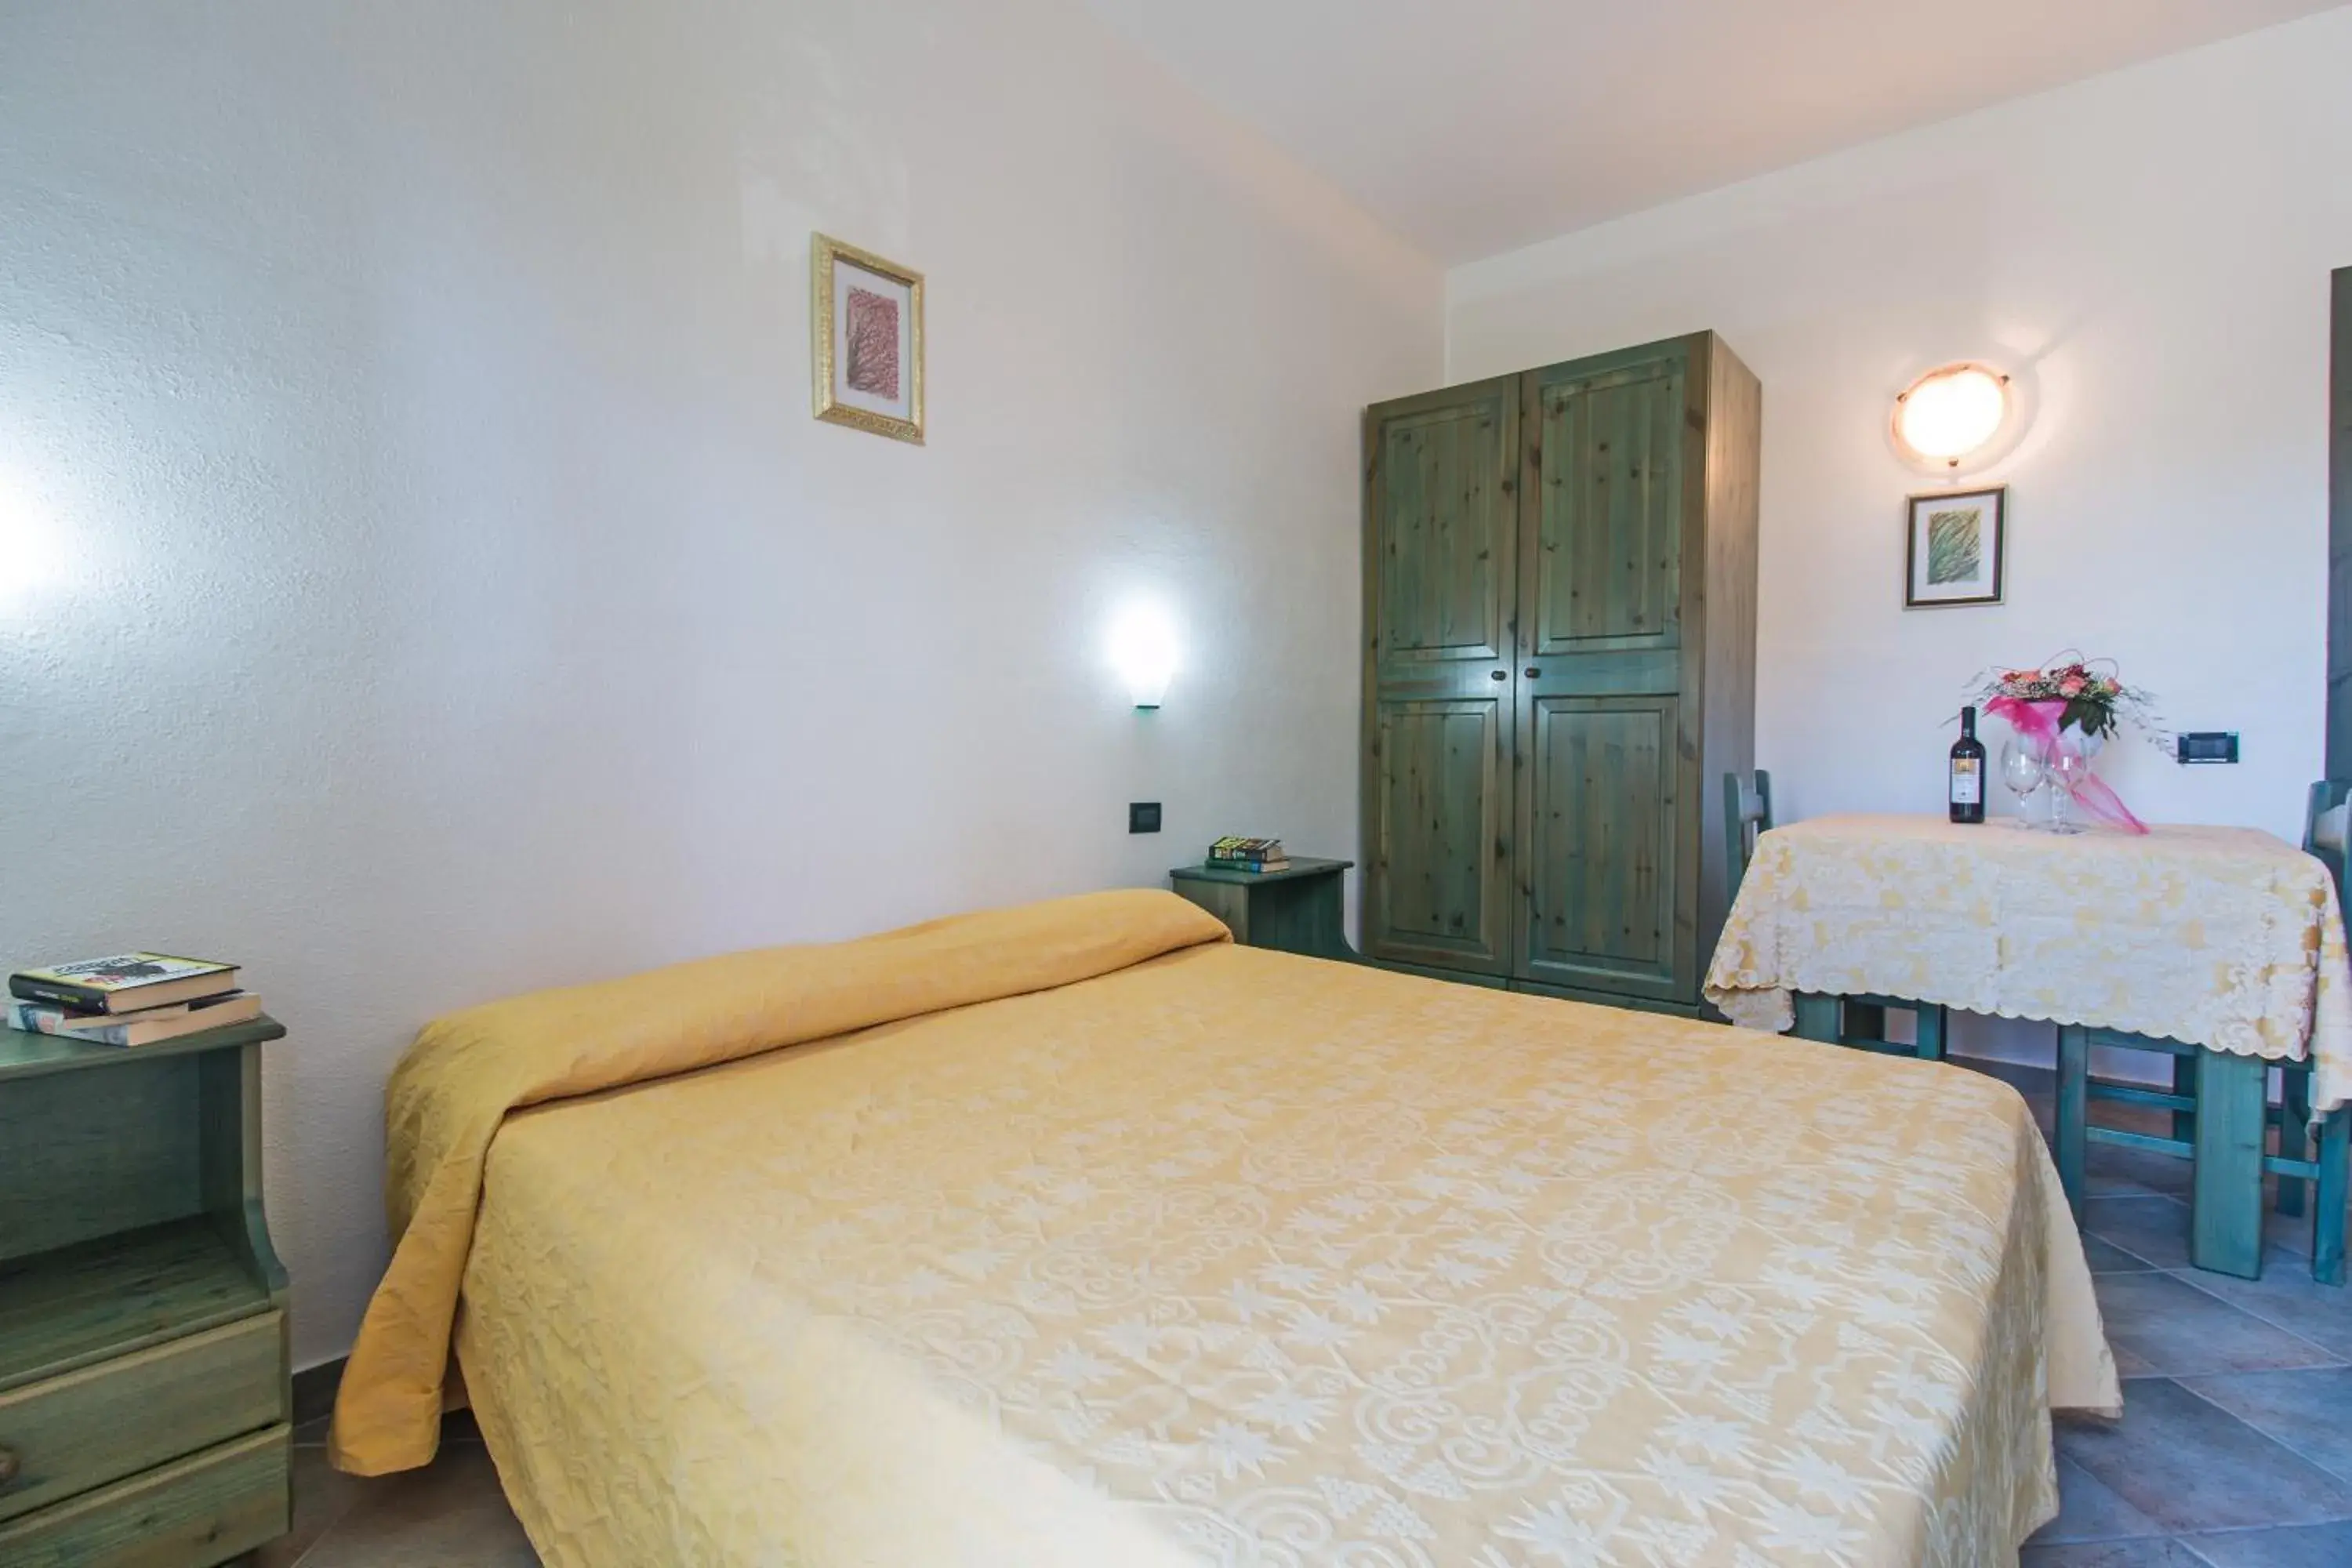 Bed, Room Photo in Albergo Residenziale Gli Ontani